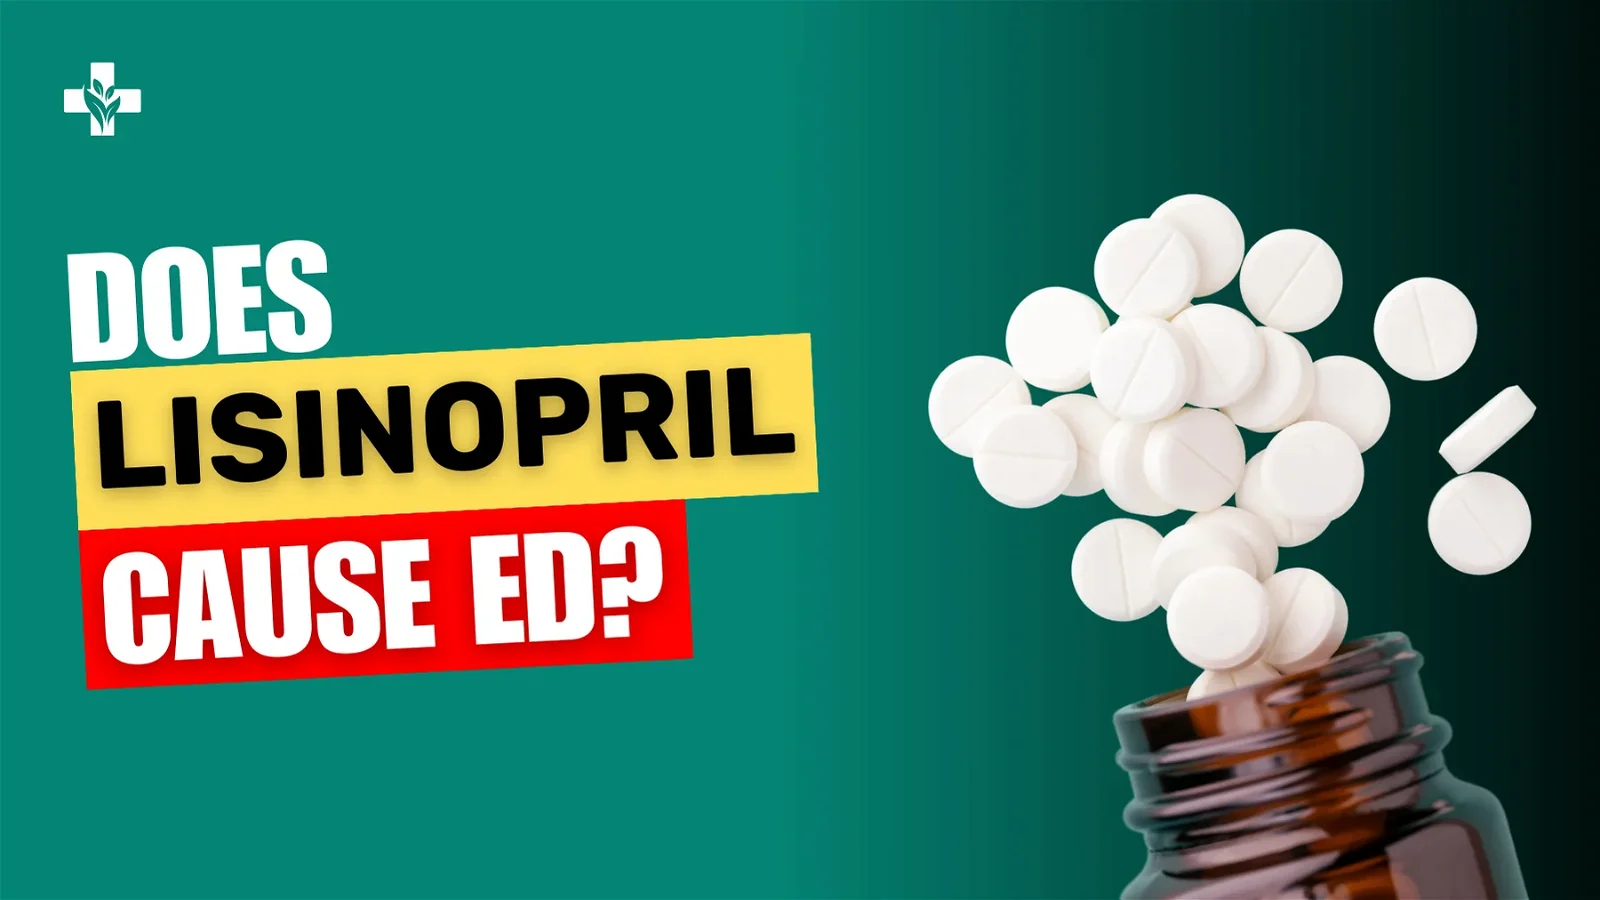 Does Lisinopril Cause ED